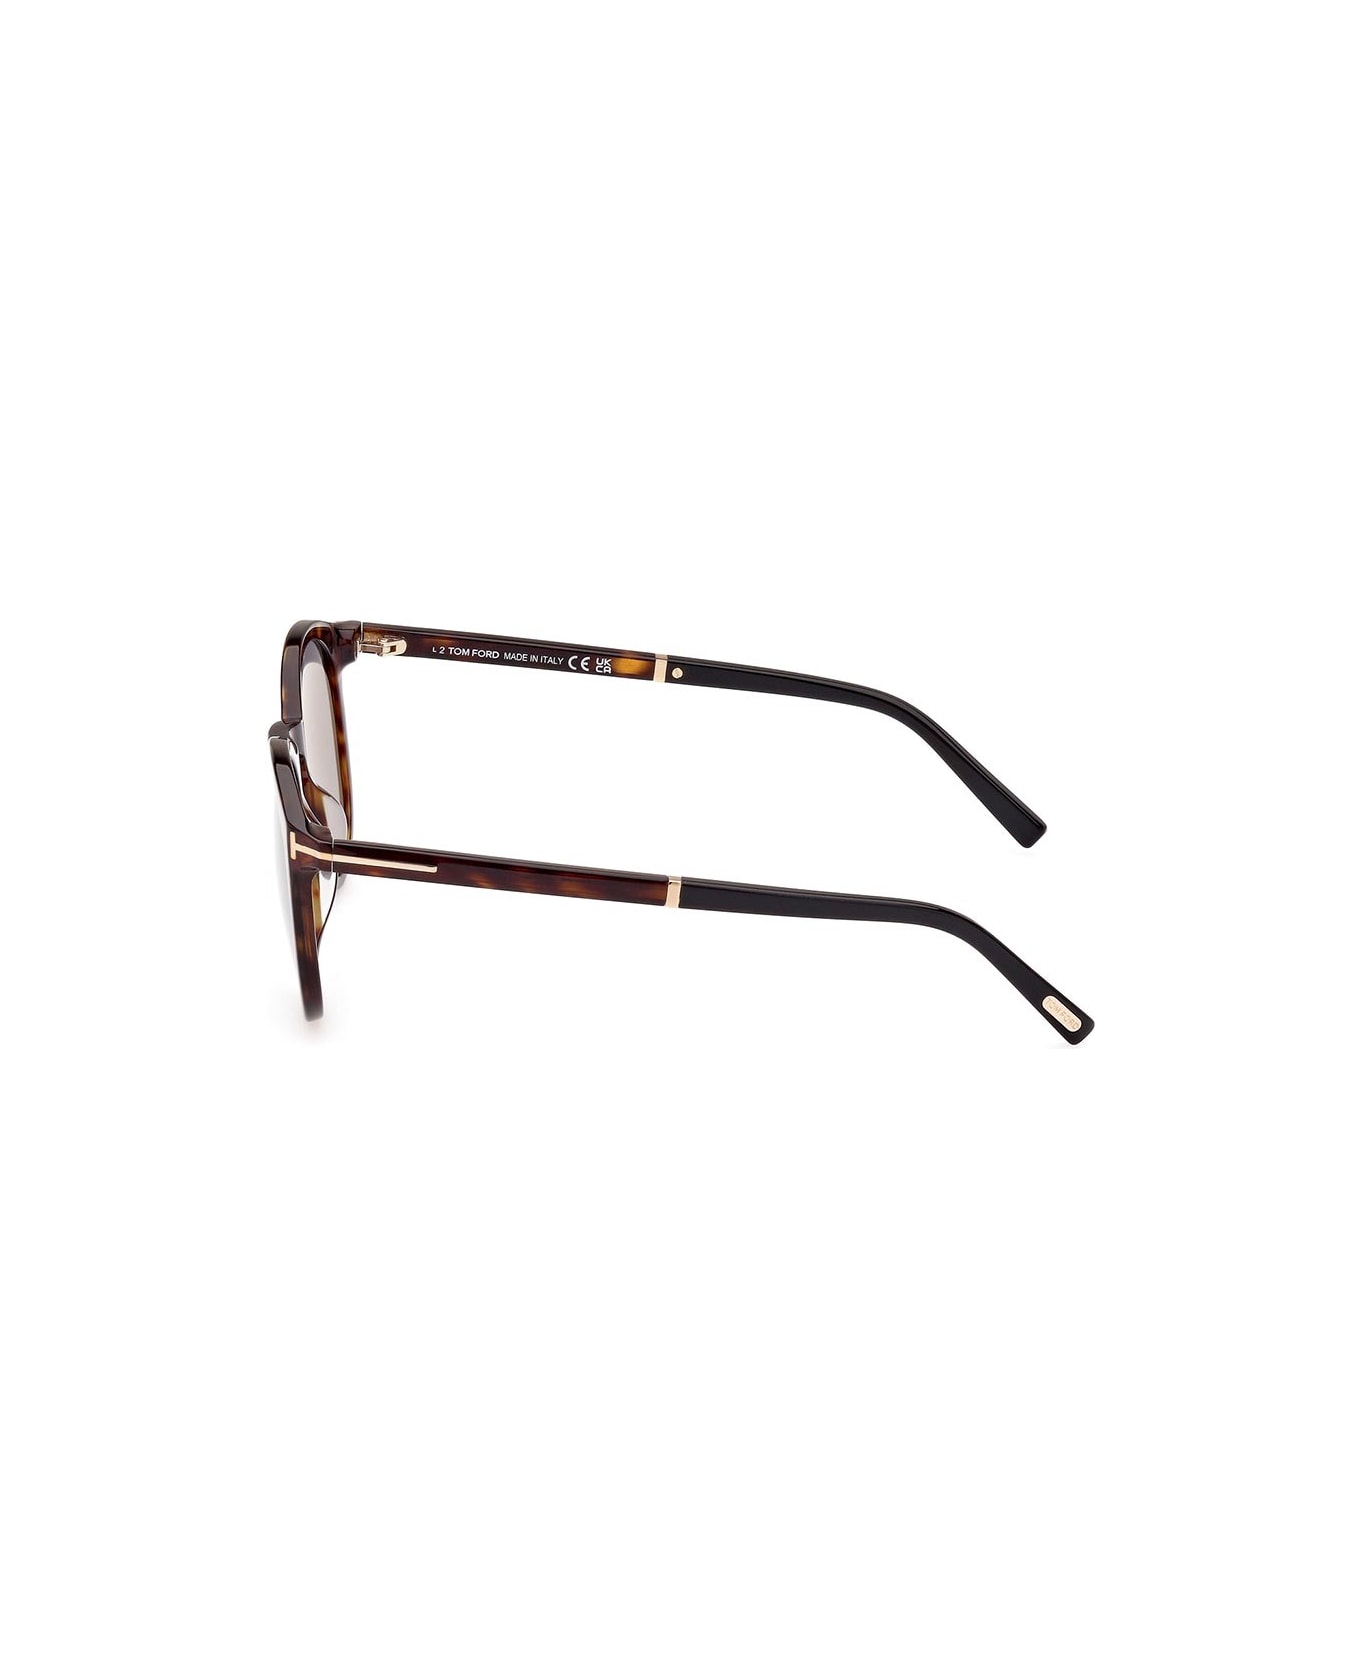 Tom Ford Eyewear Sunglasses - Marrone/Grigio サングラス